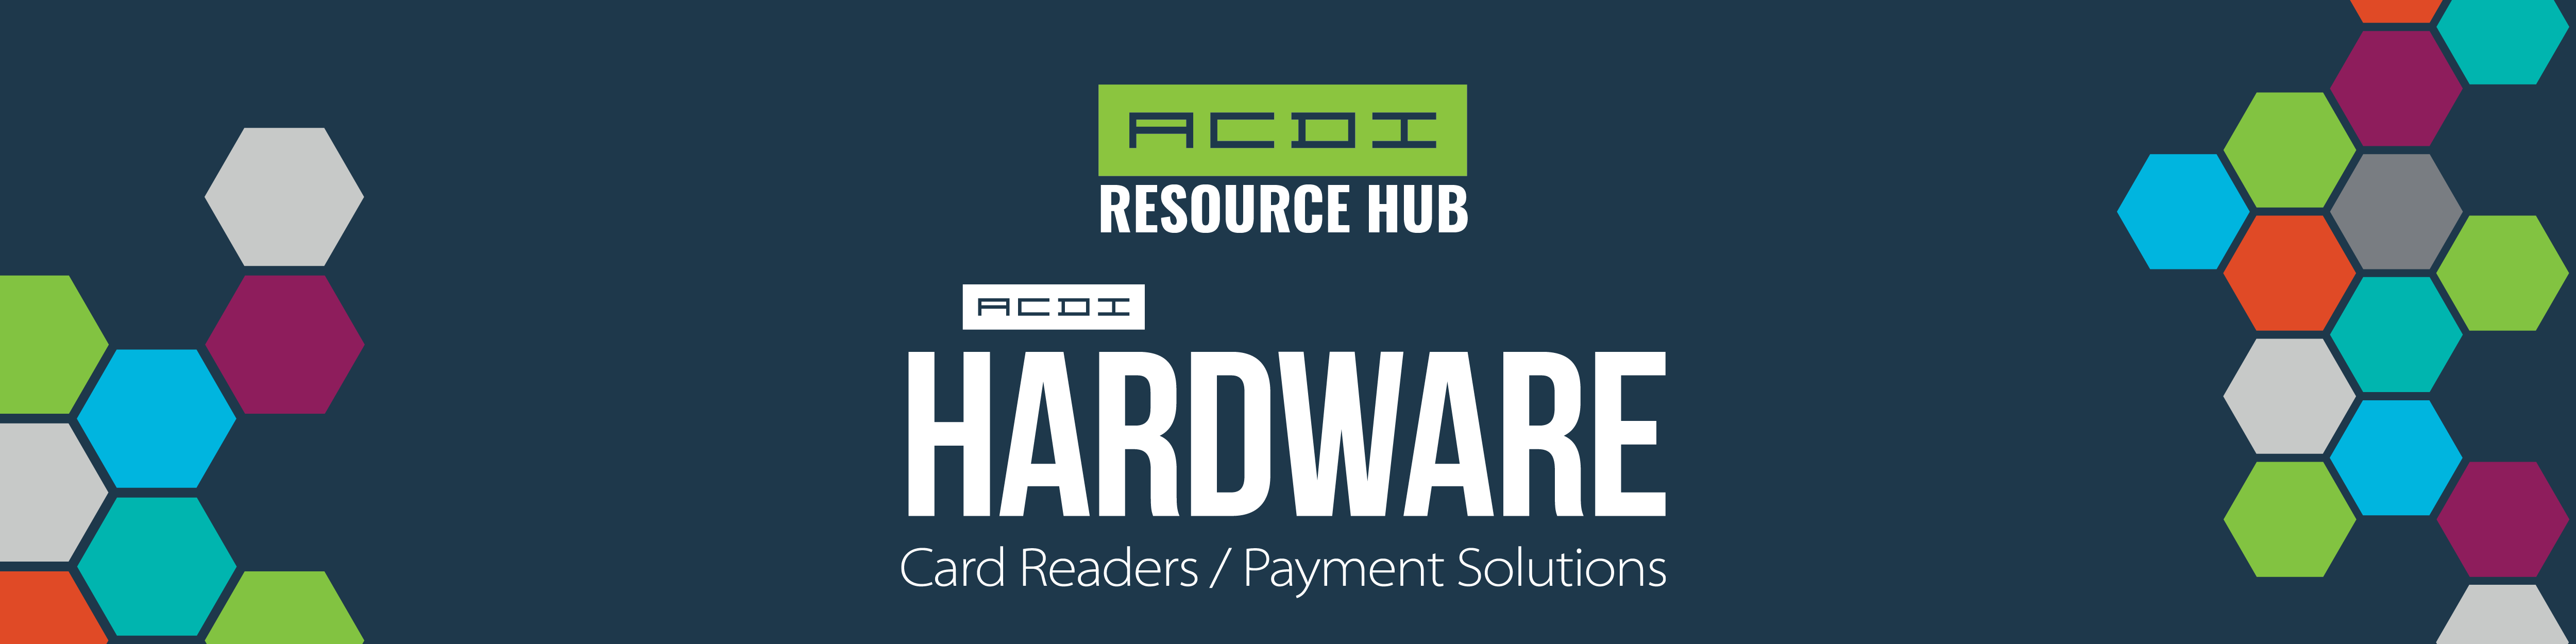 ACDI Hardware RH Header